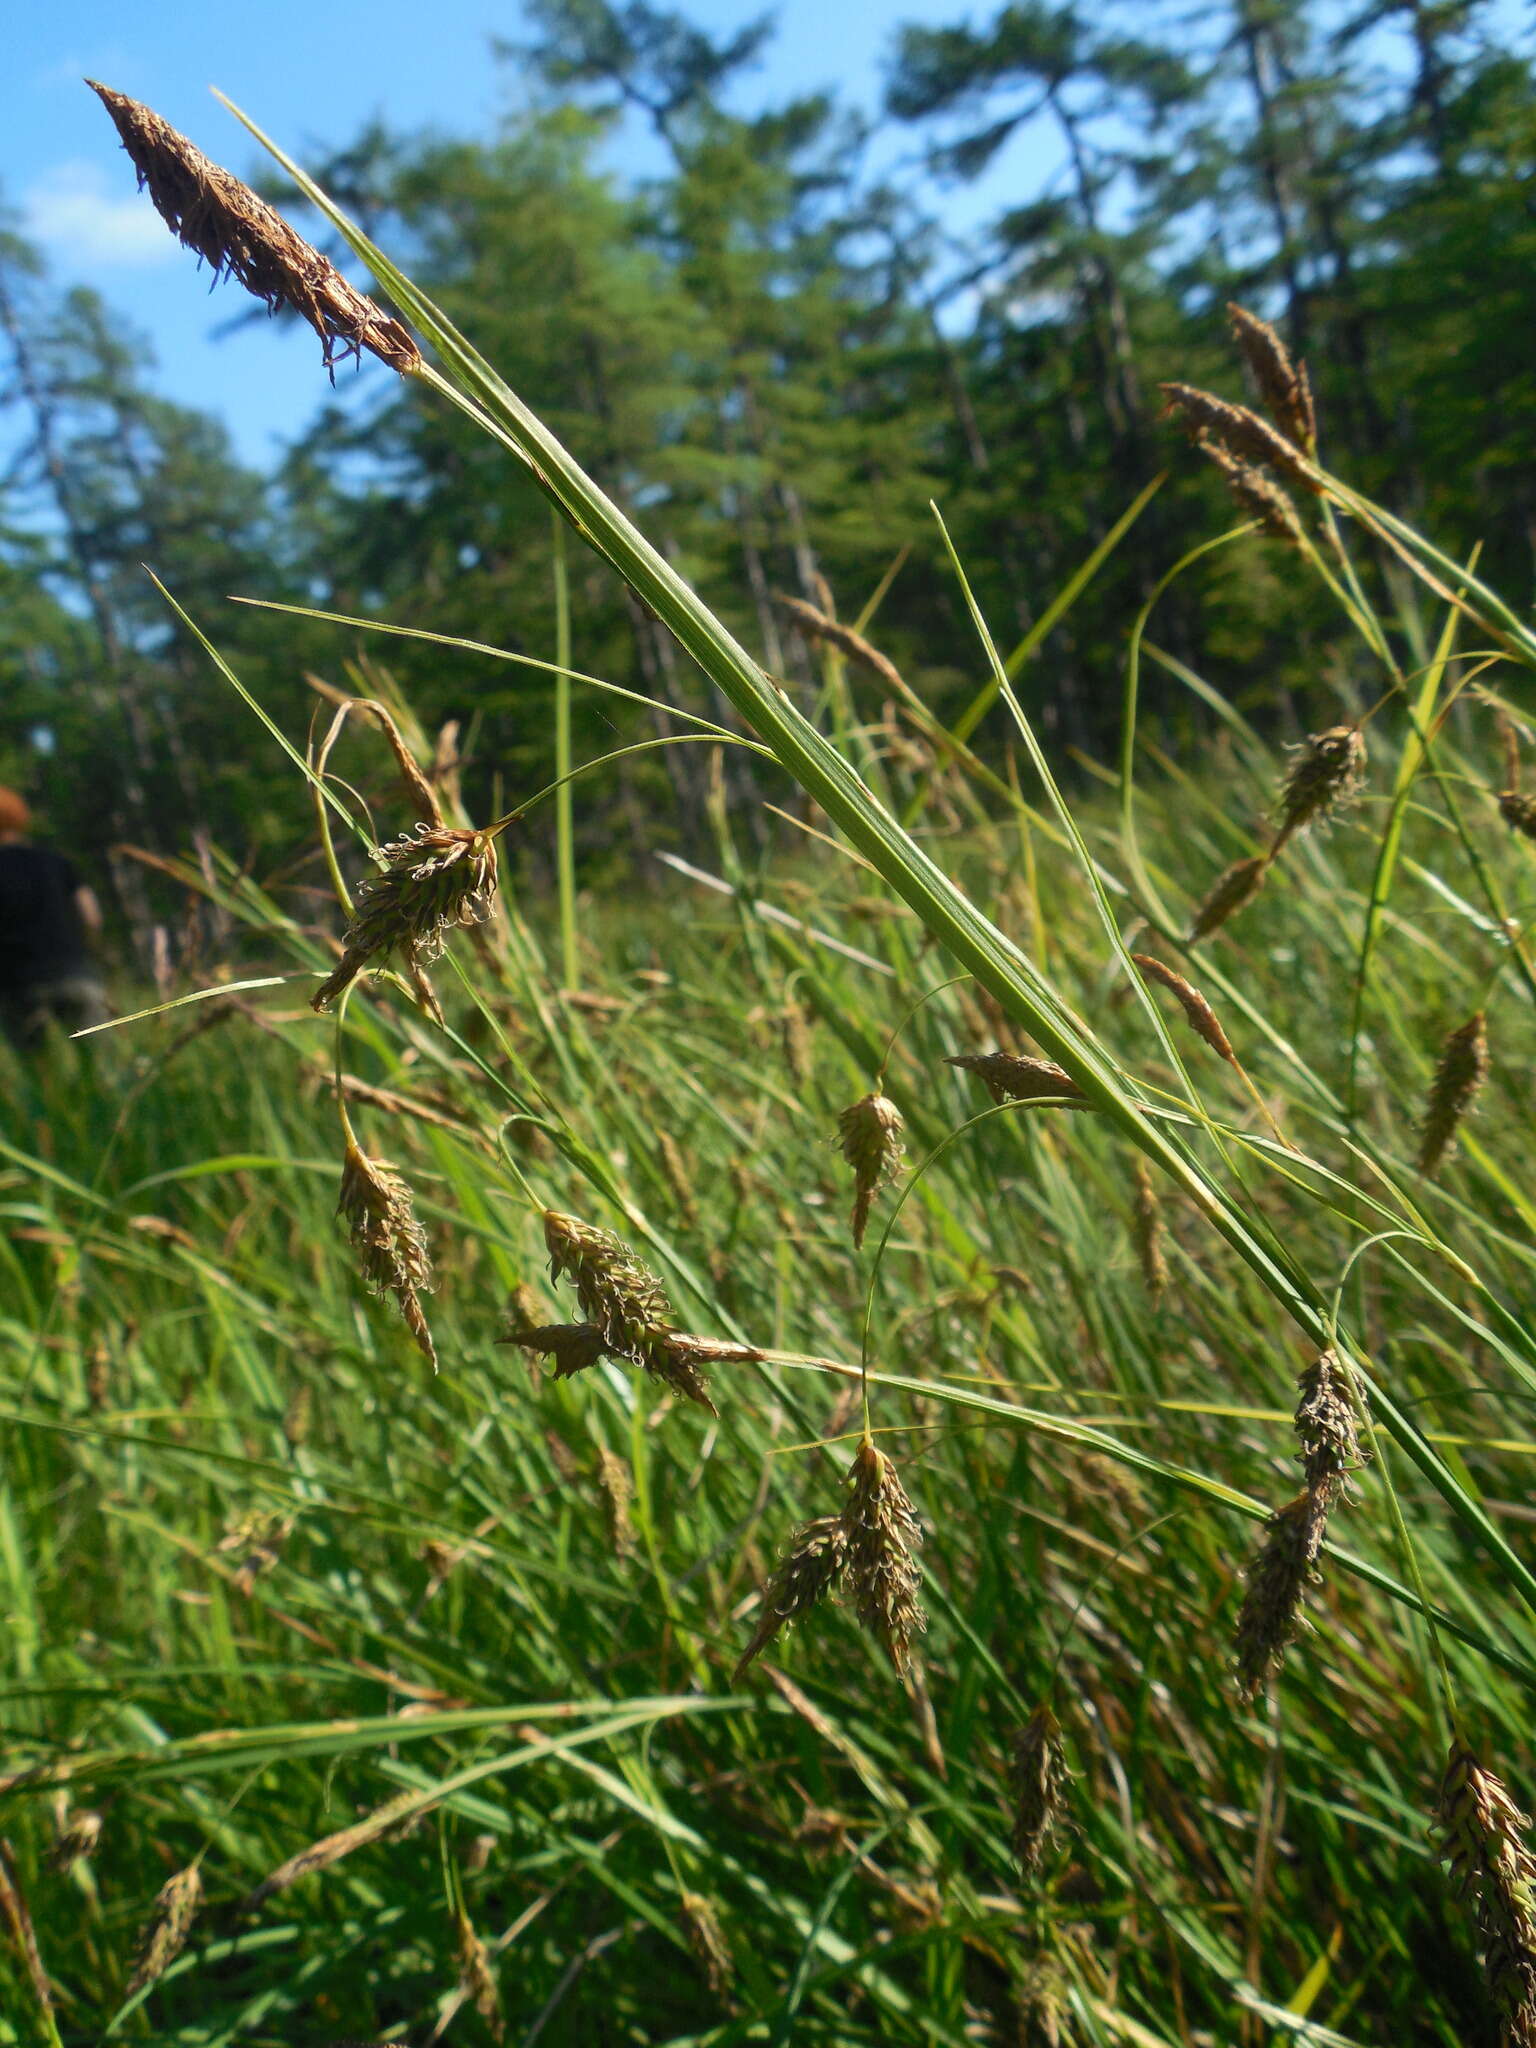 Image of Carex middendorffii F. Schmidt